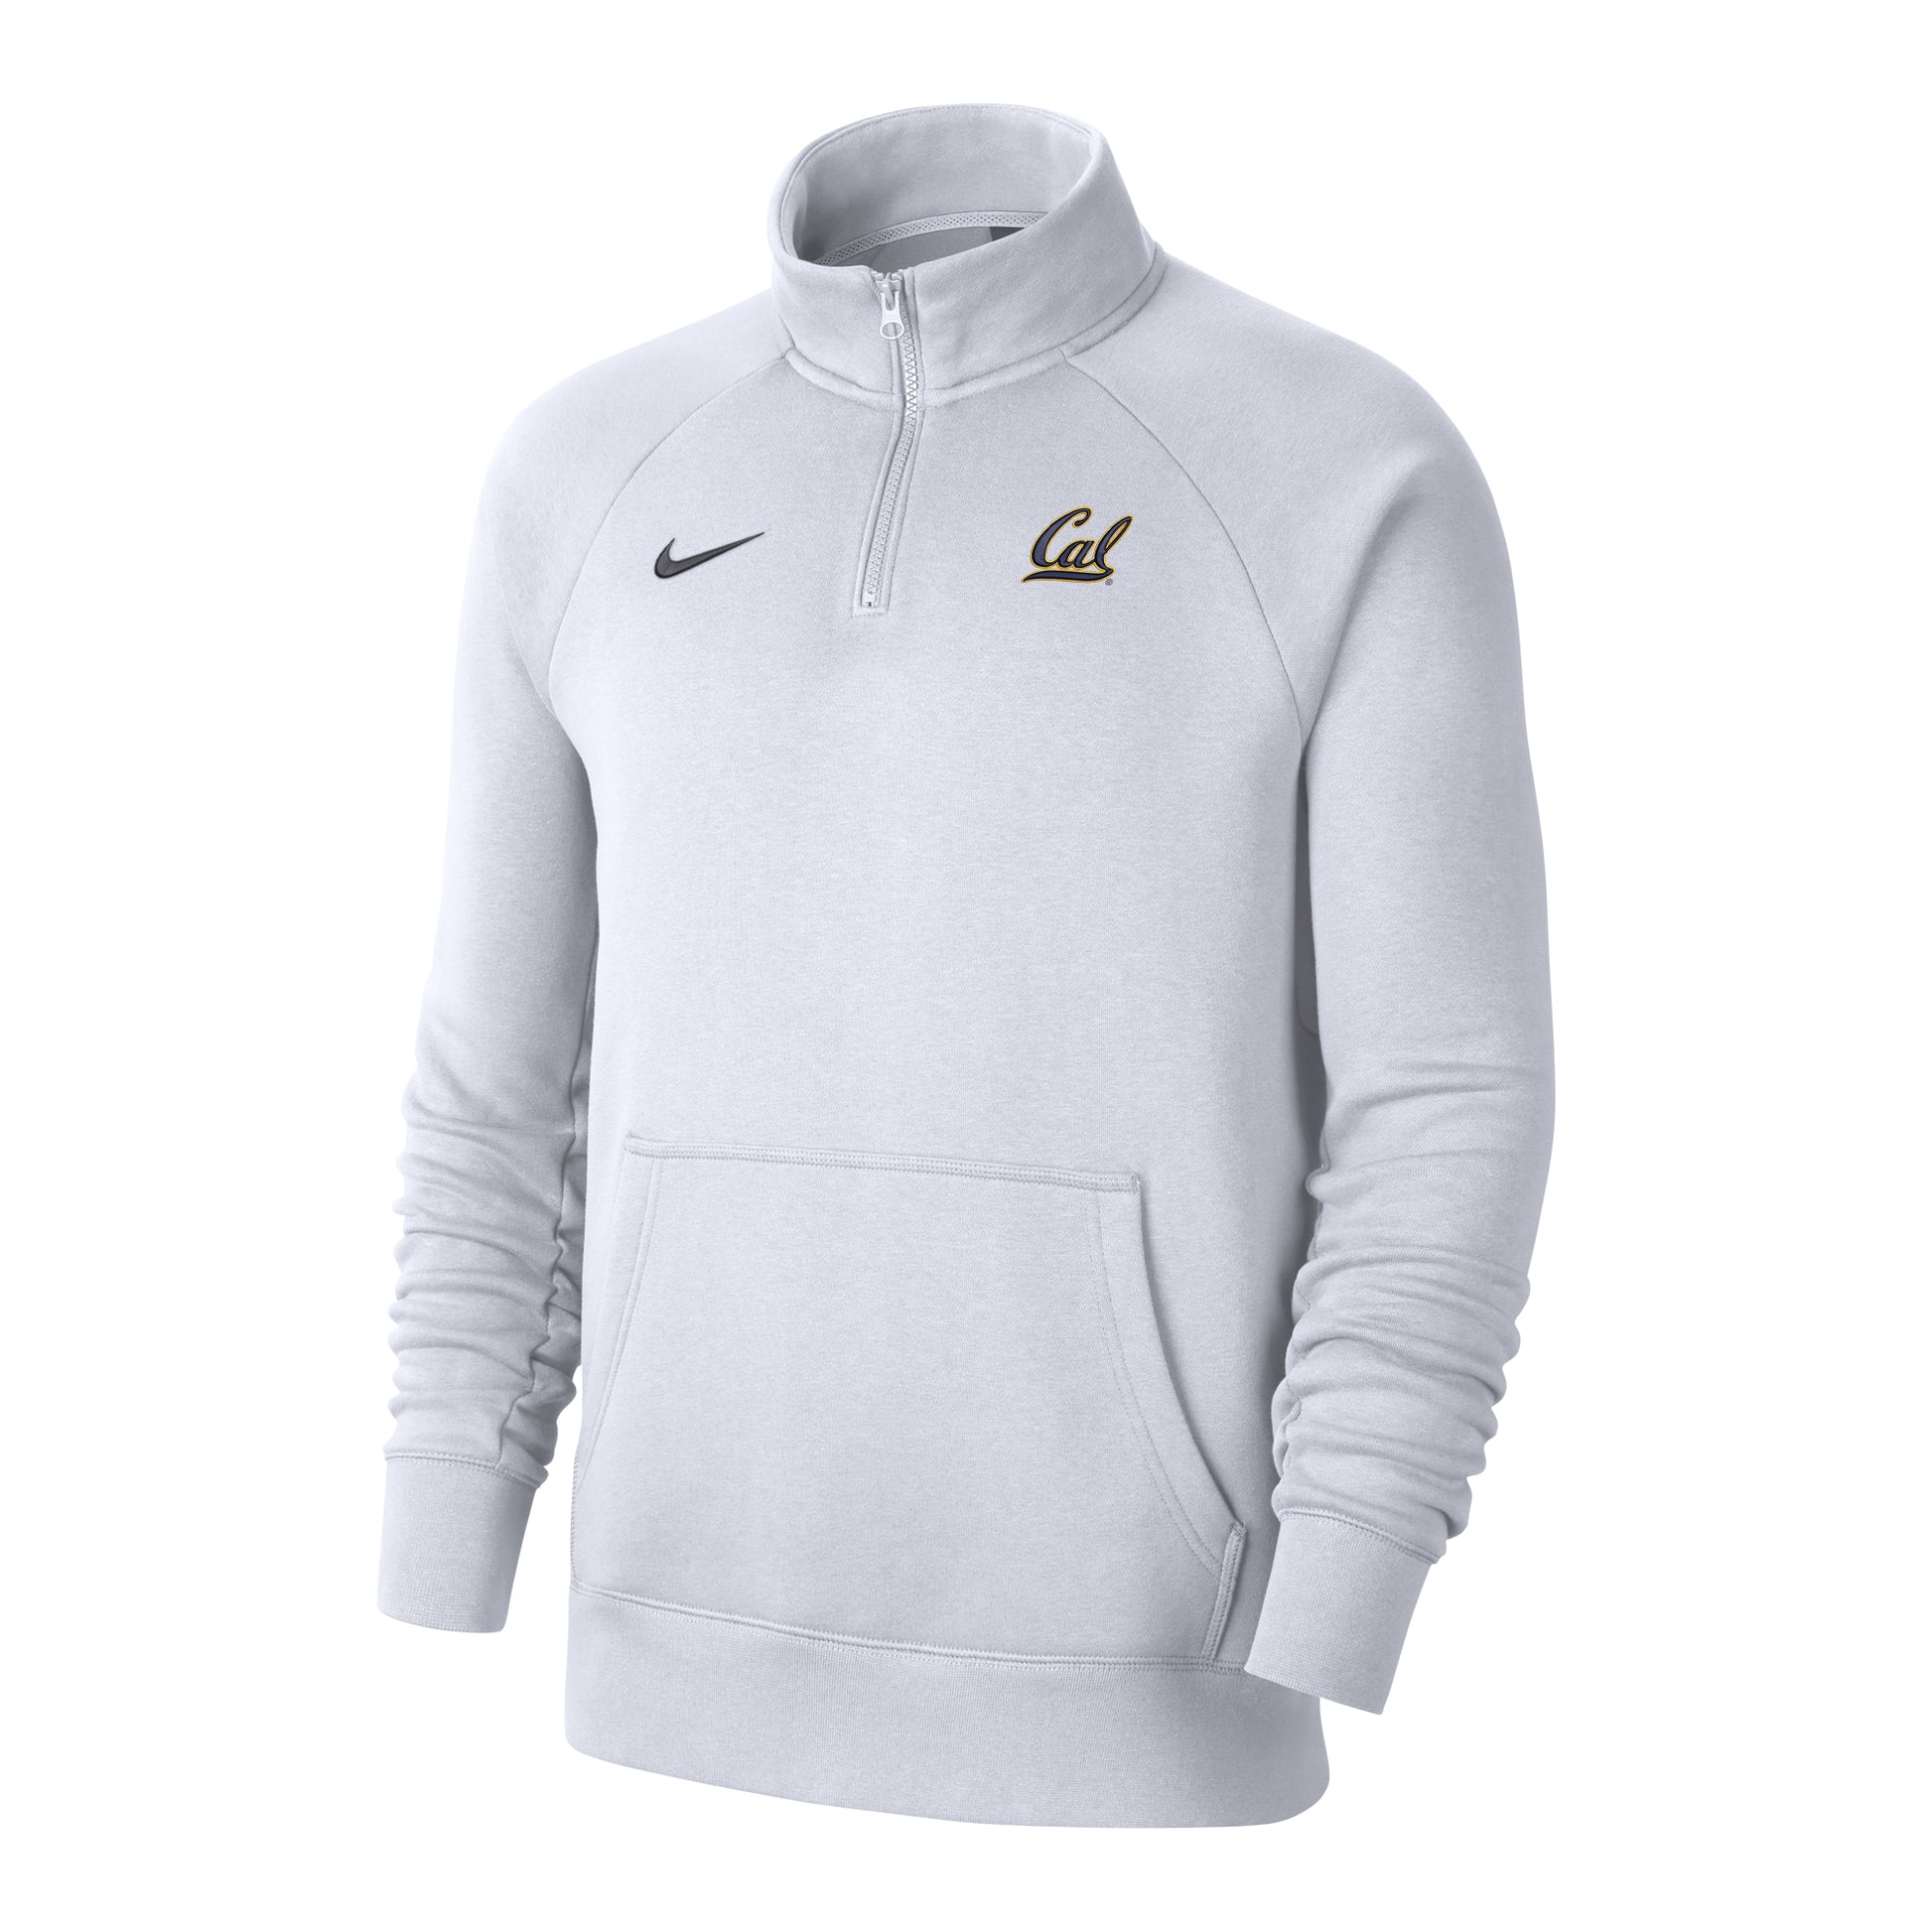 U.C. Berkeley Cal embroidered Nike club fleece quarter zip sweatshirt-White-Shop College Wear